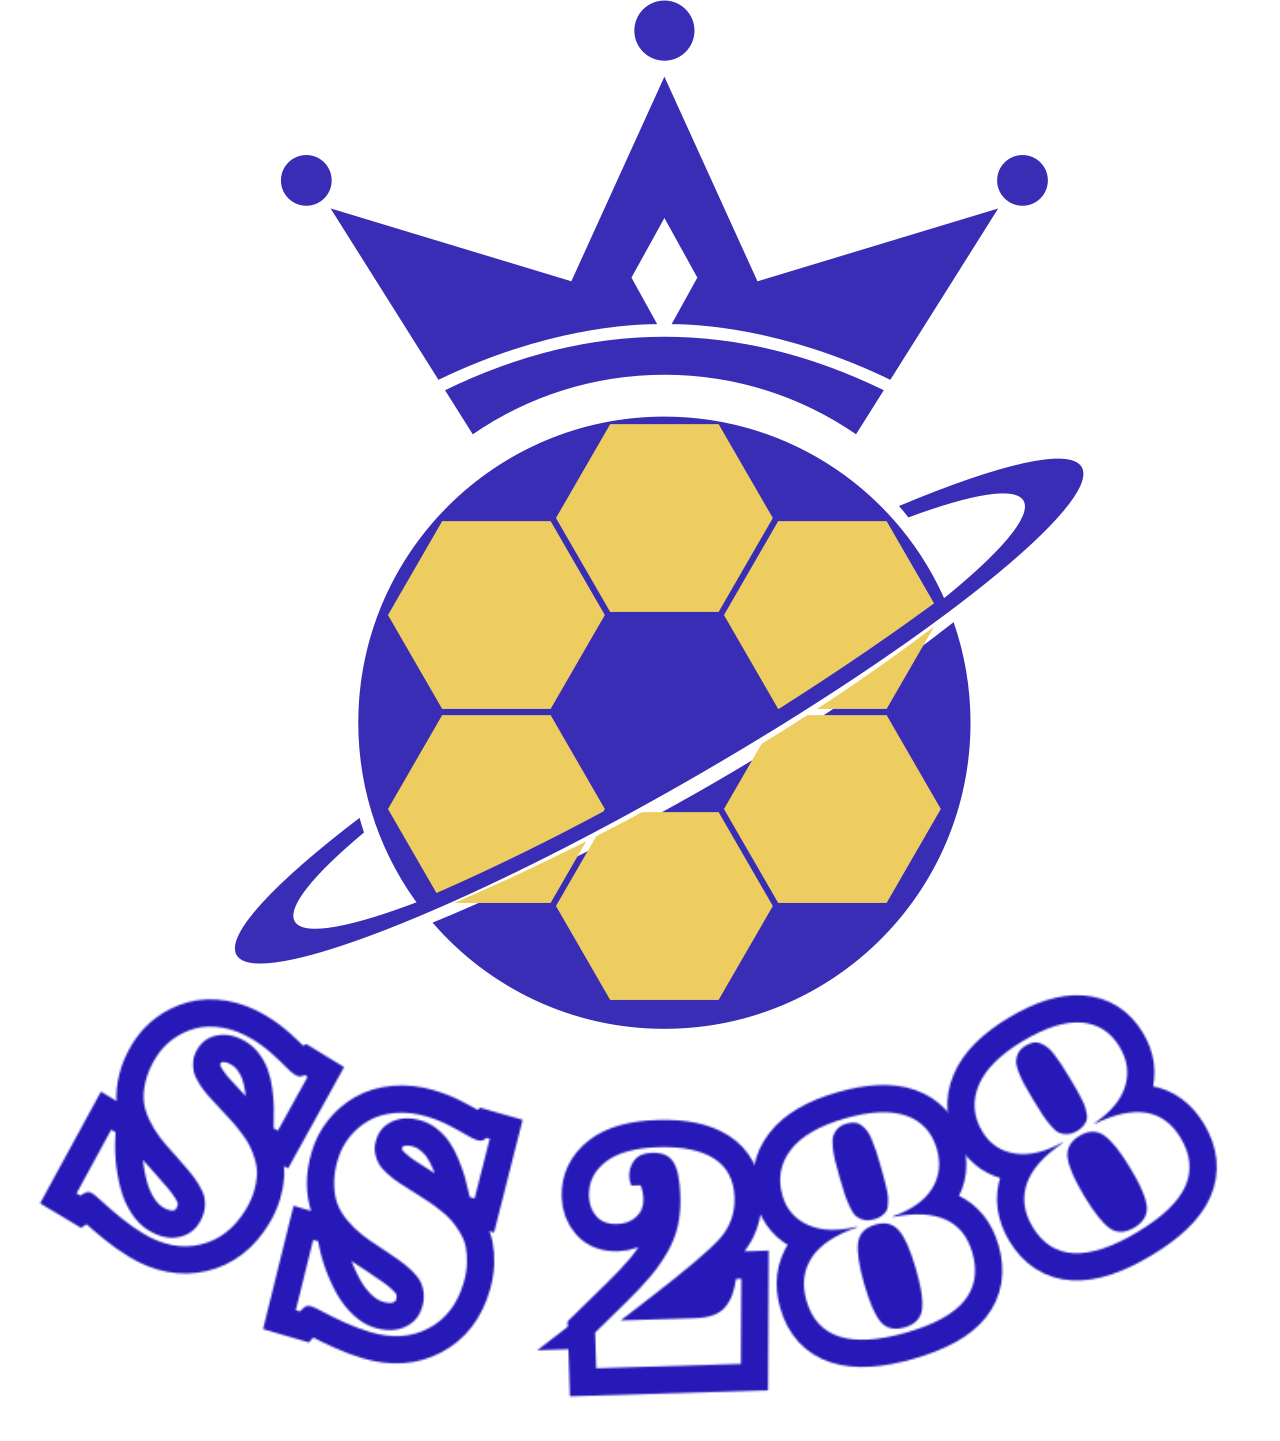 SS 288's logo